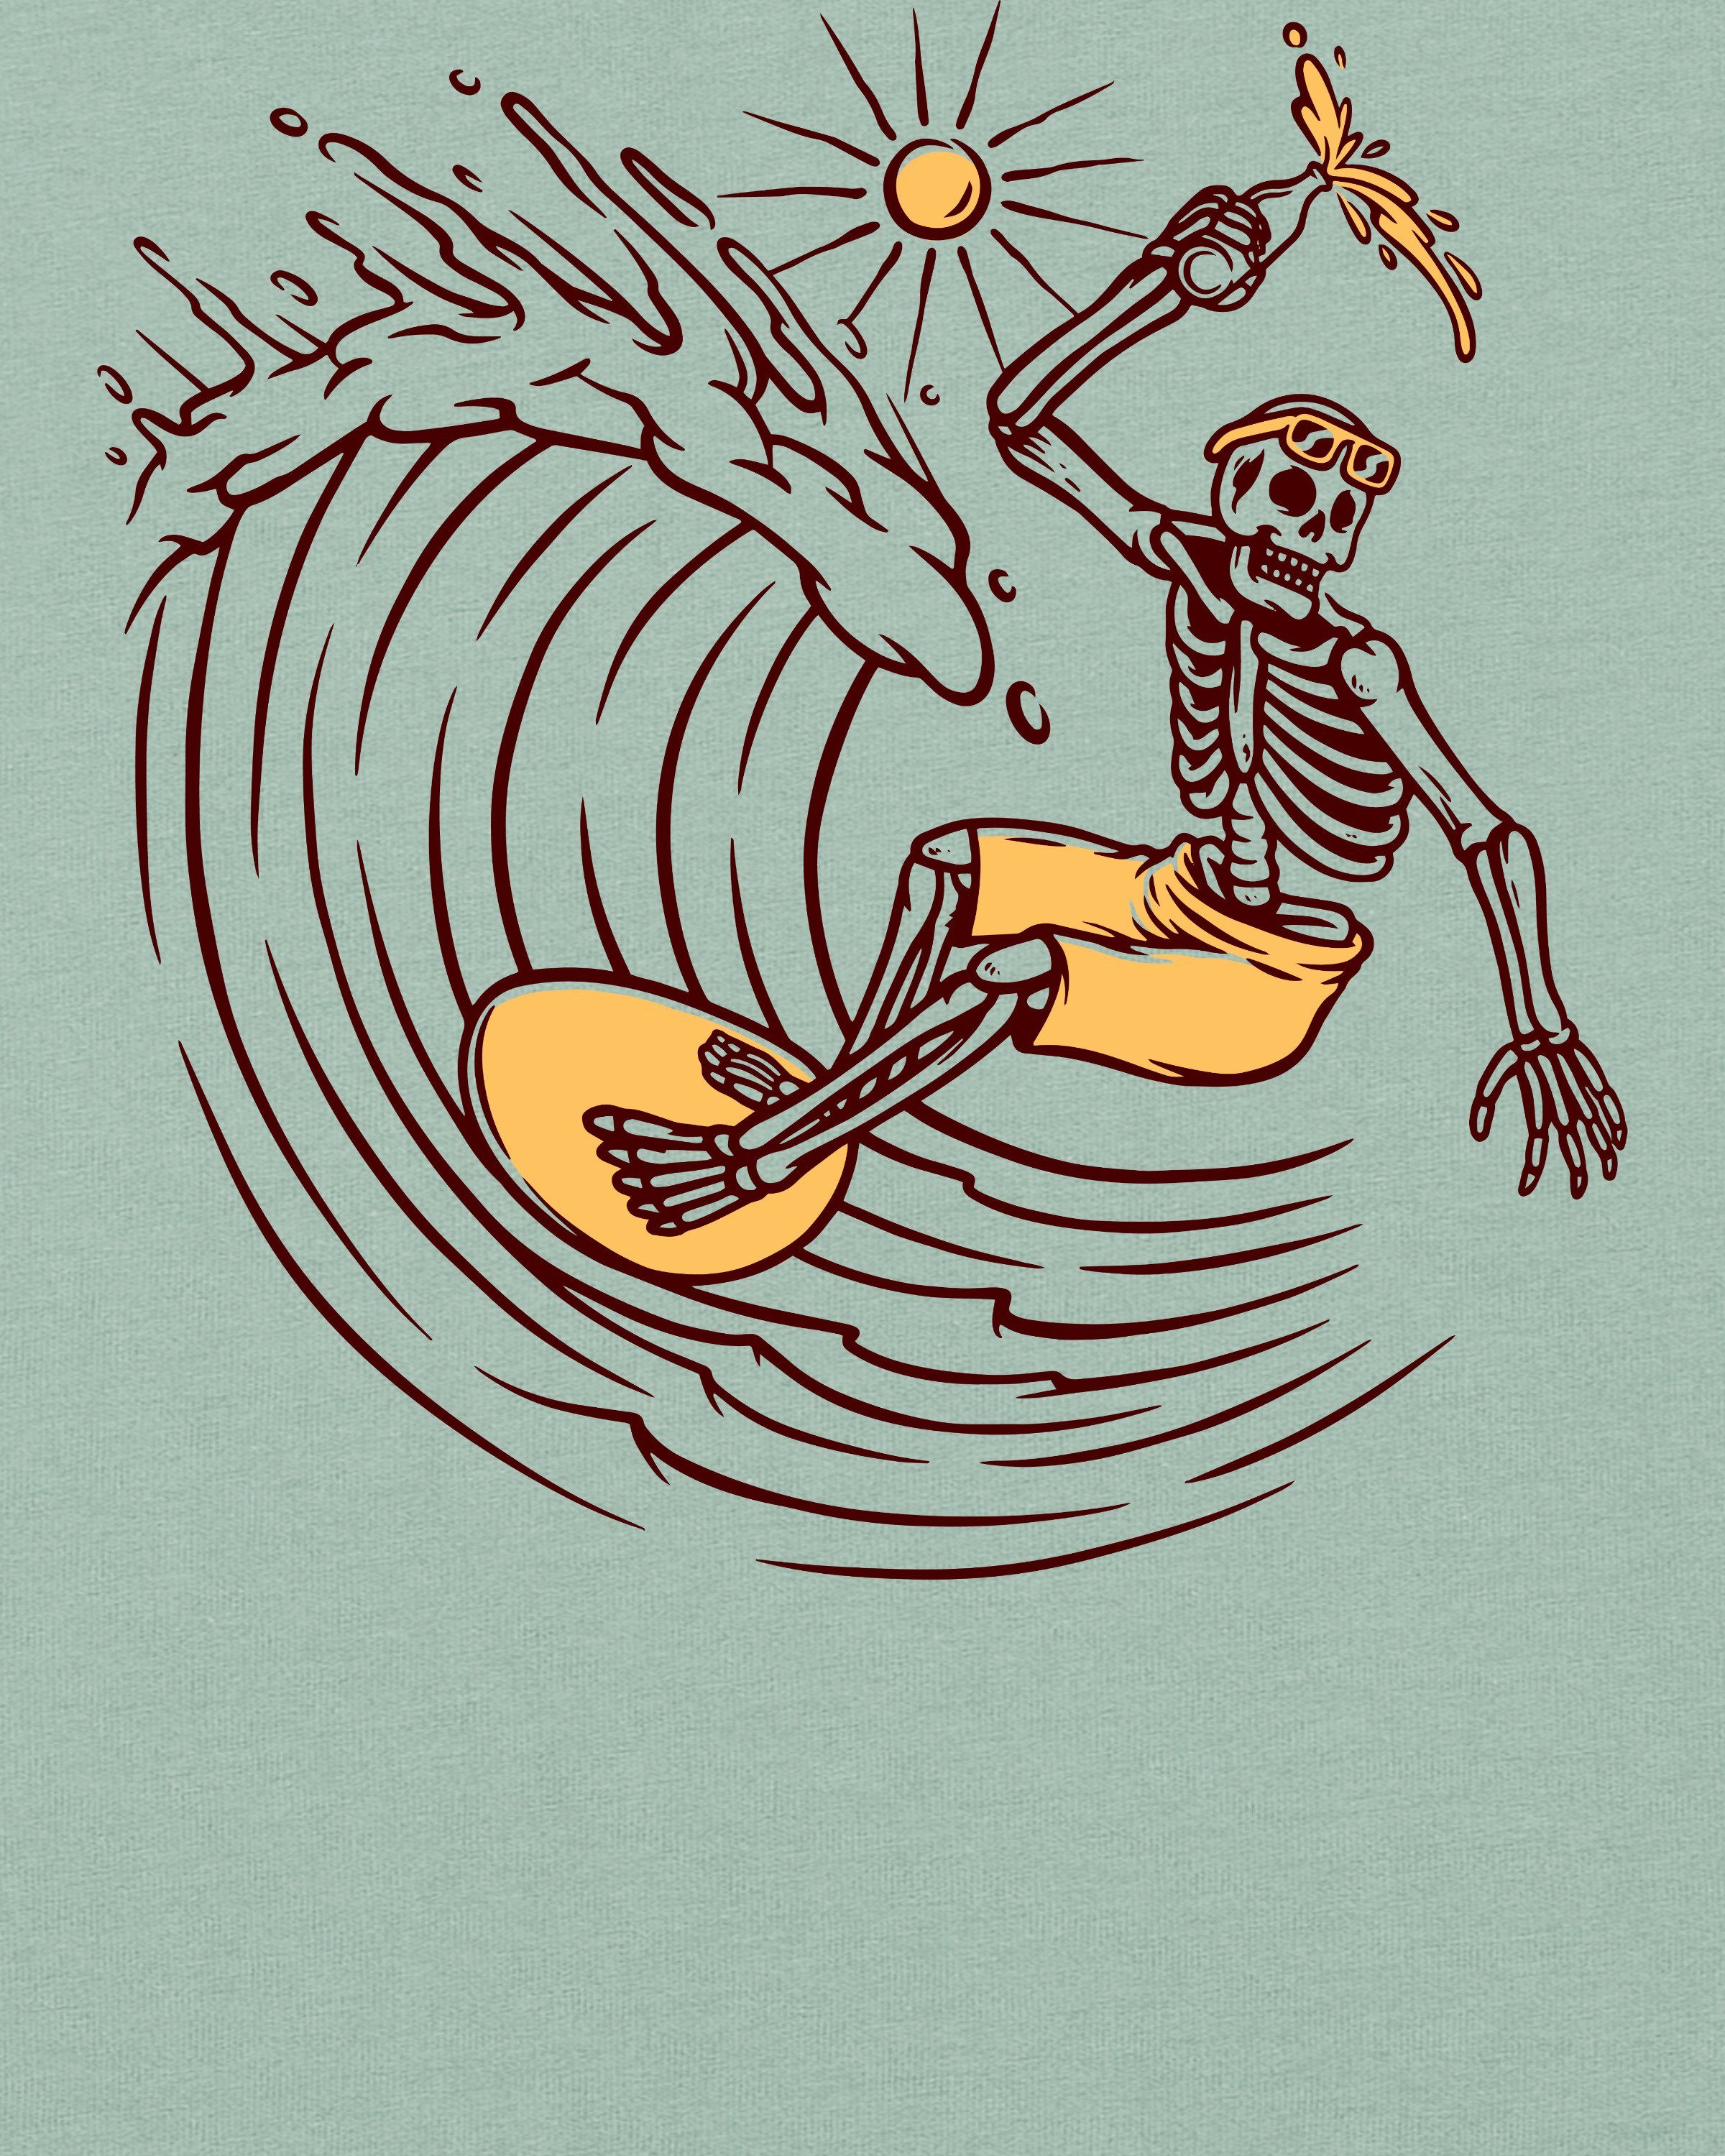 Print-Shirt for (1-tlg) Apparel Surfing wat? life Aloe